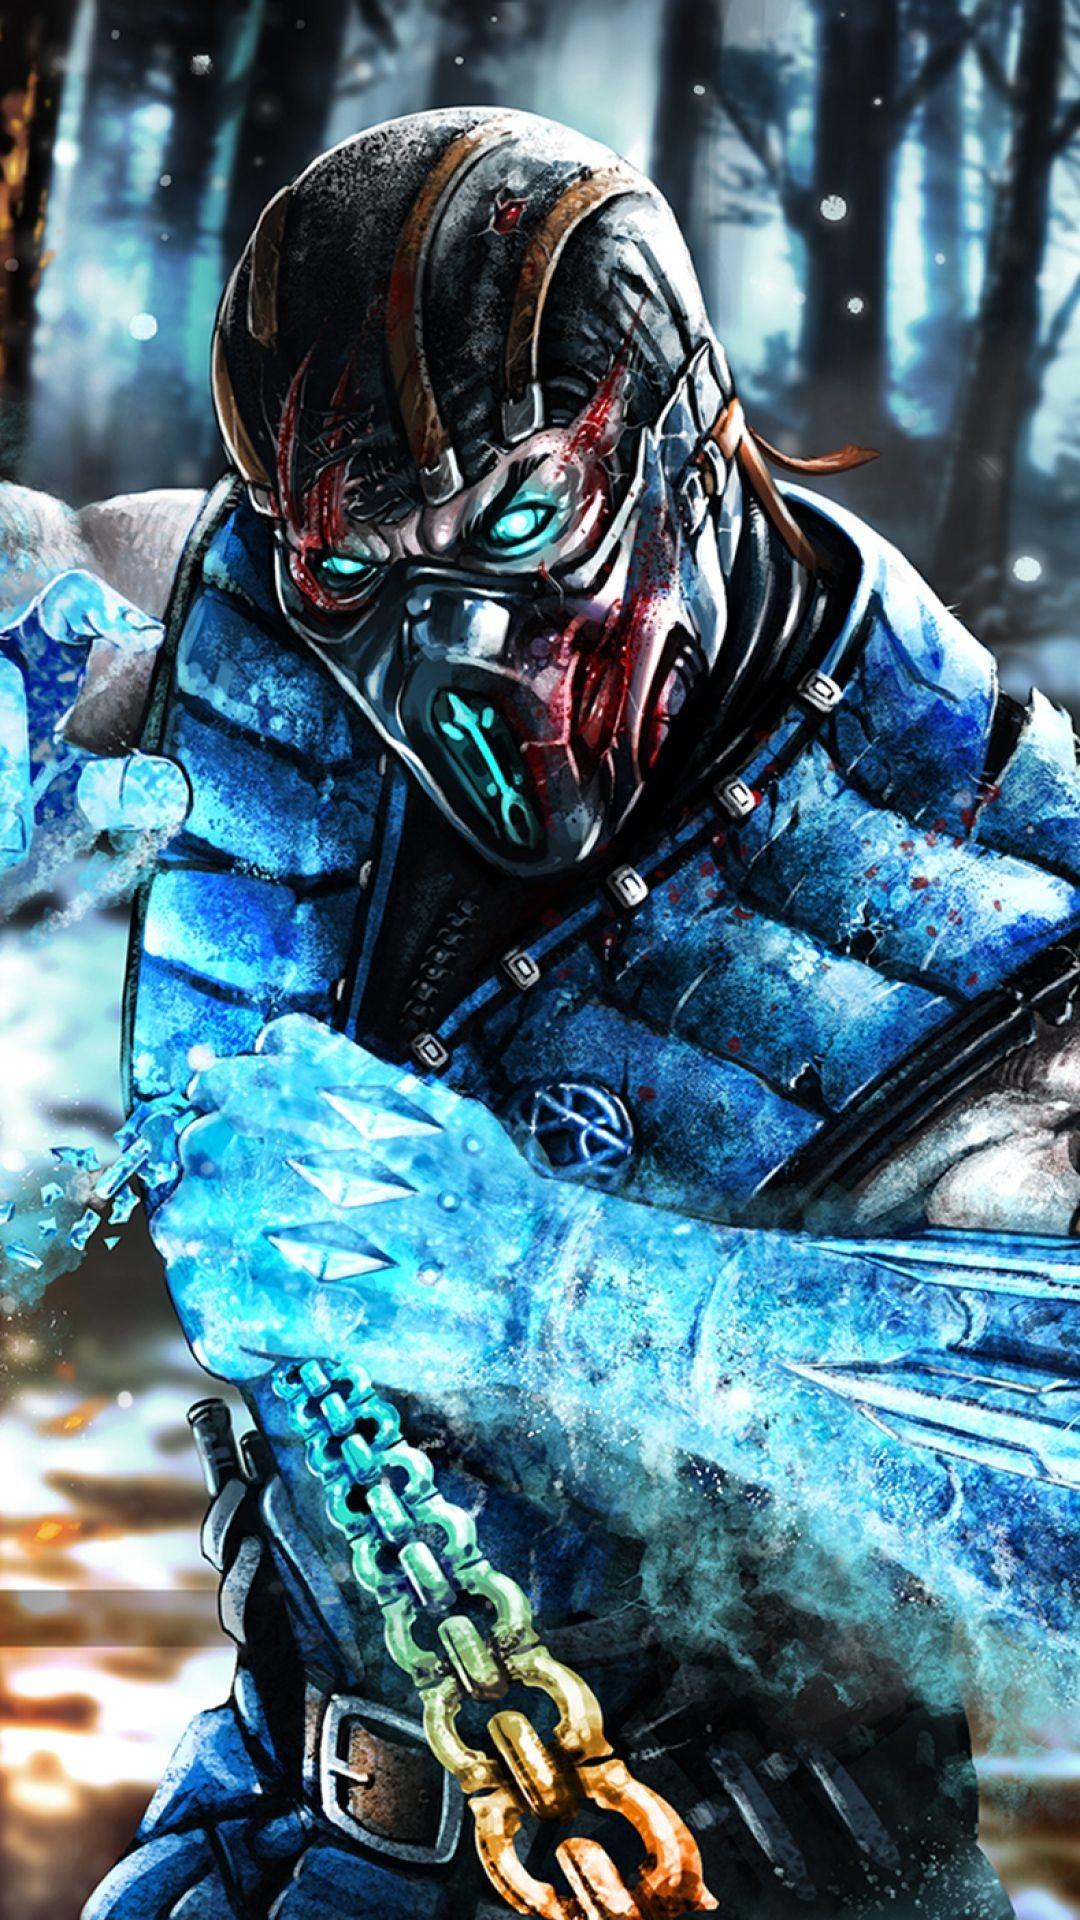 Mortal Kombat Wallpaper background picture